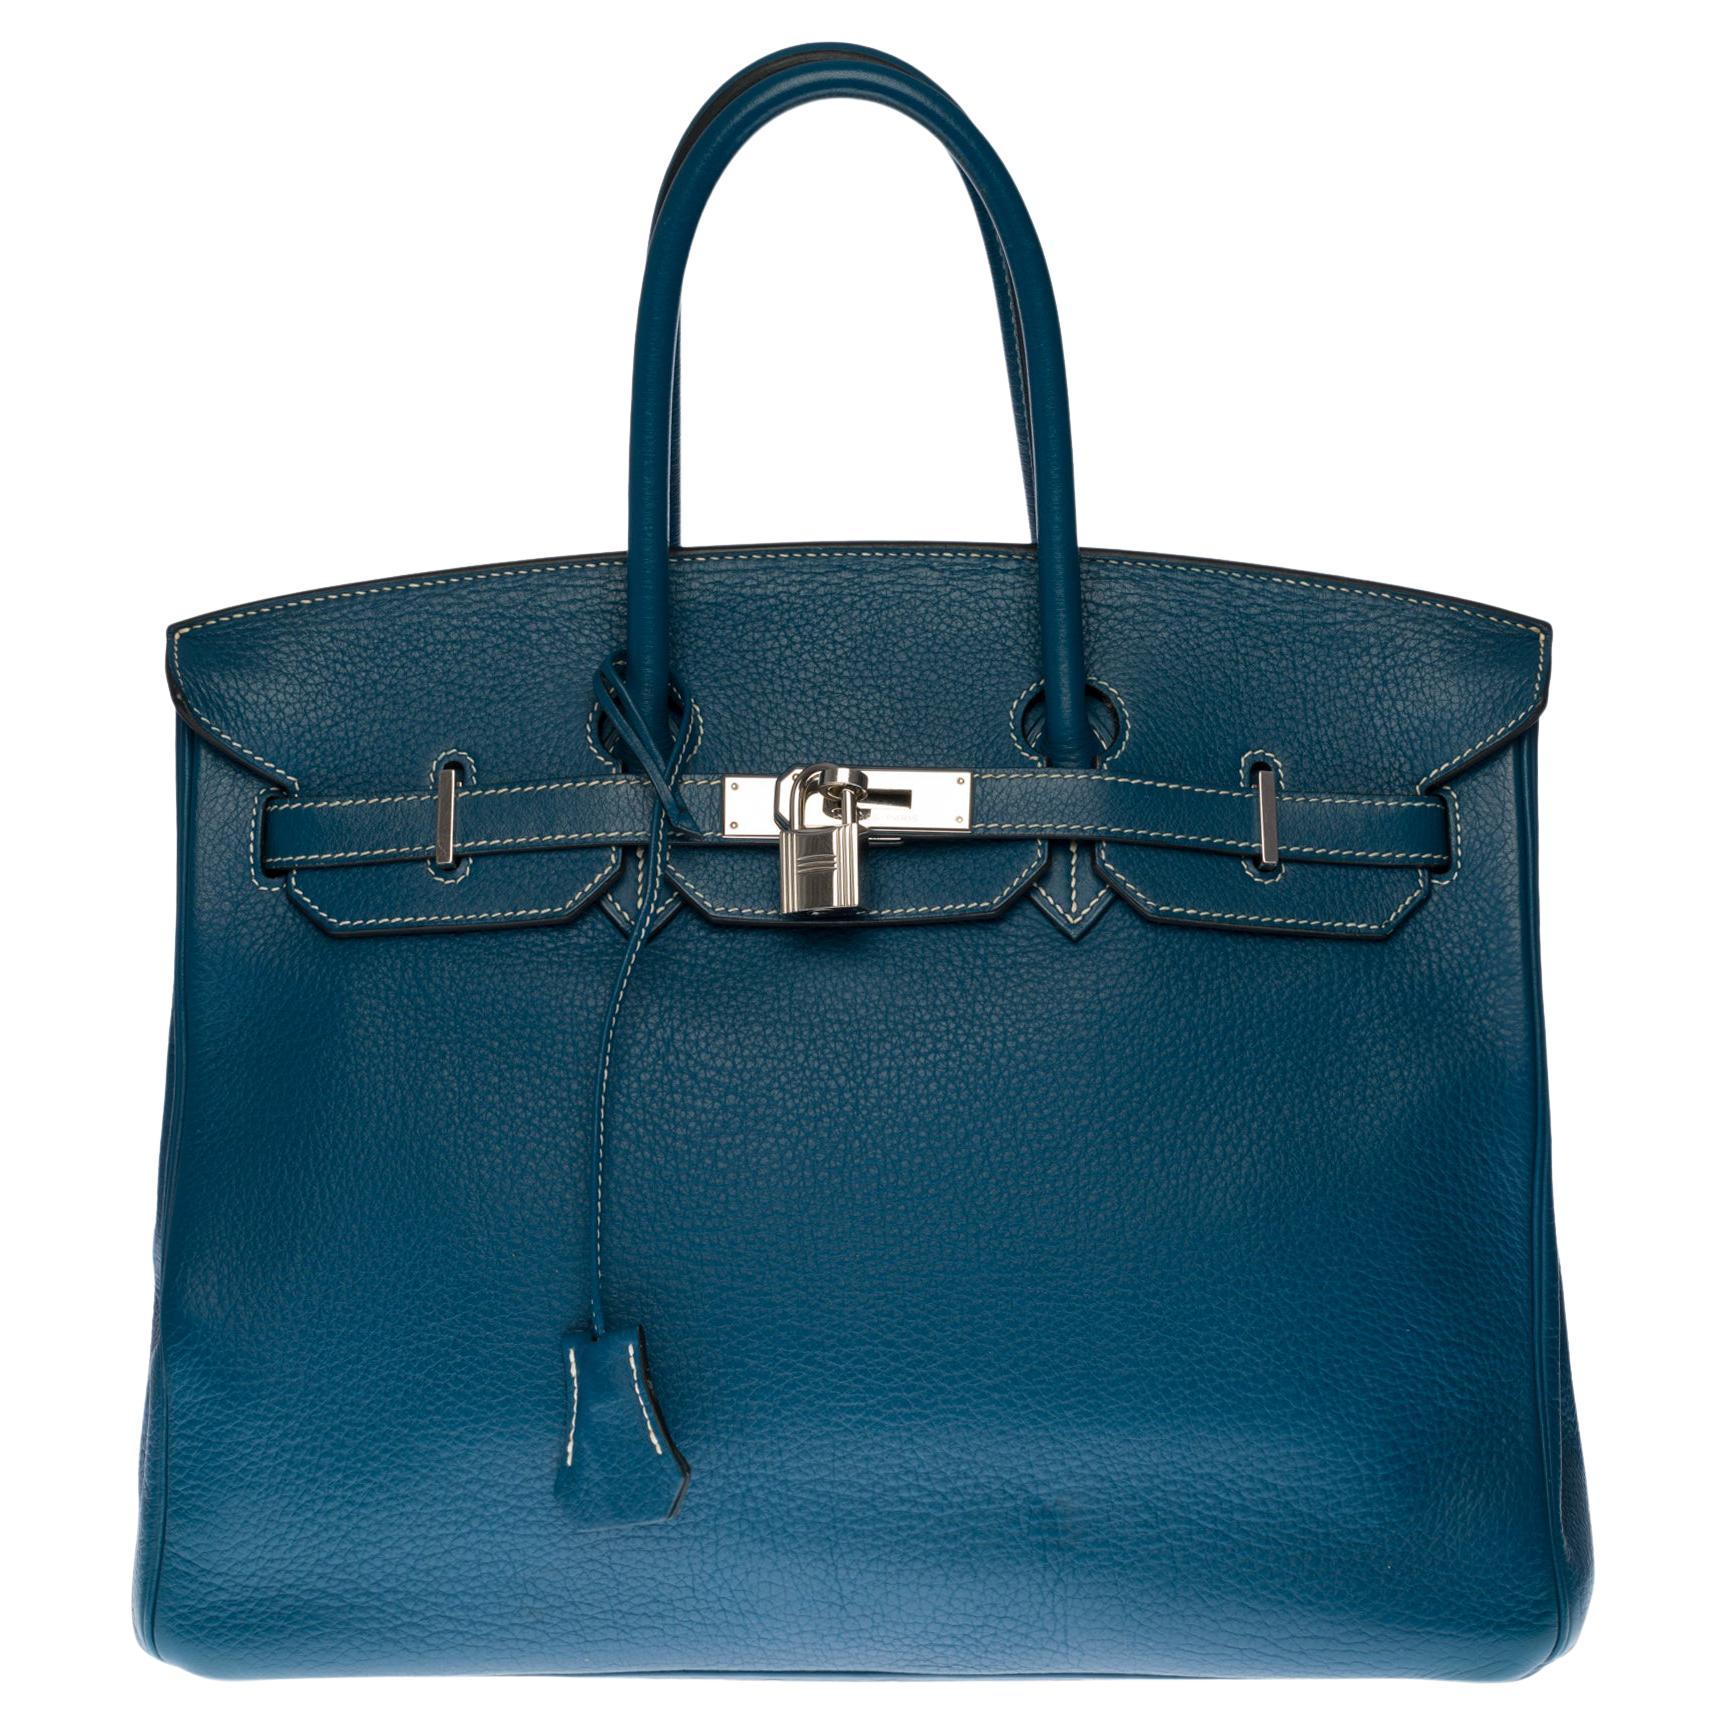 Stunning Hermès Birkin 35 handbag in Blue Thalassa Taurillon leather, SHW